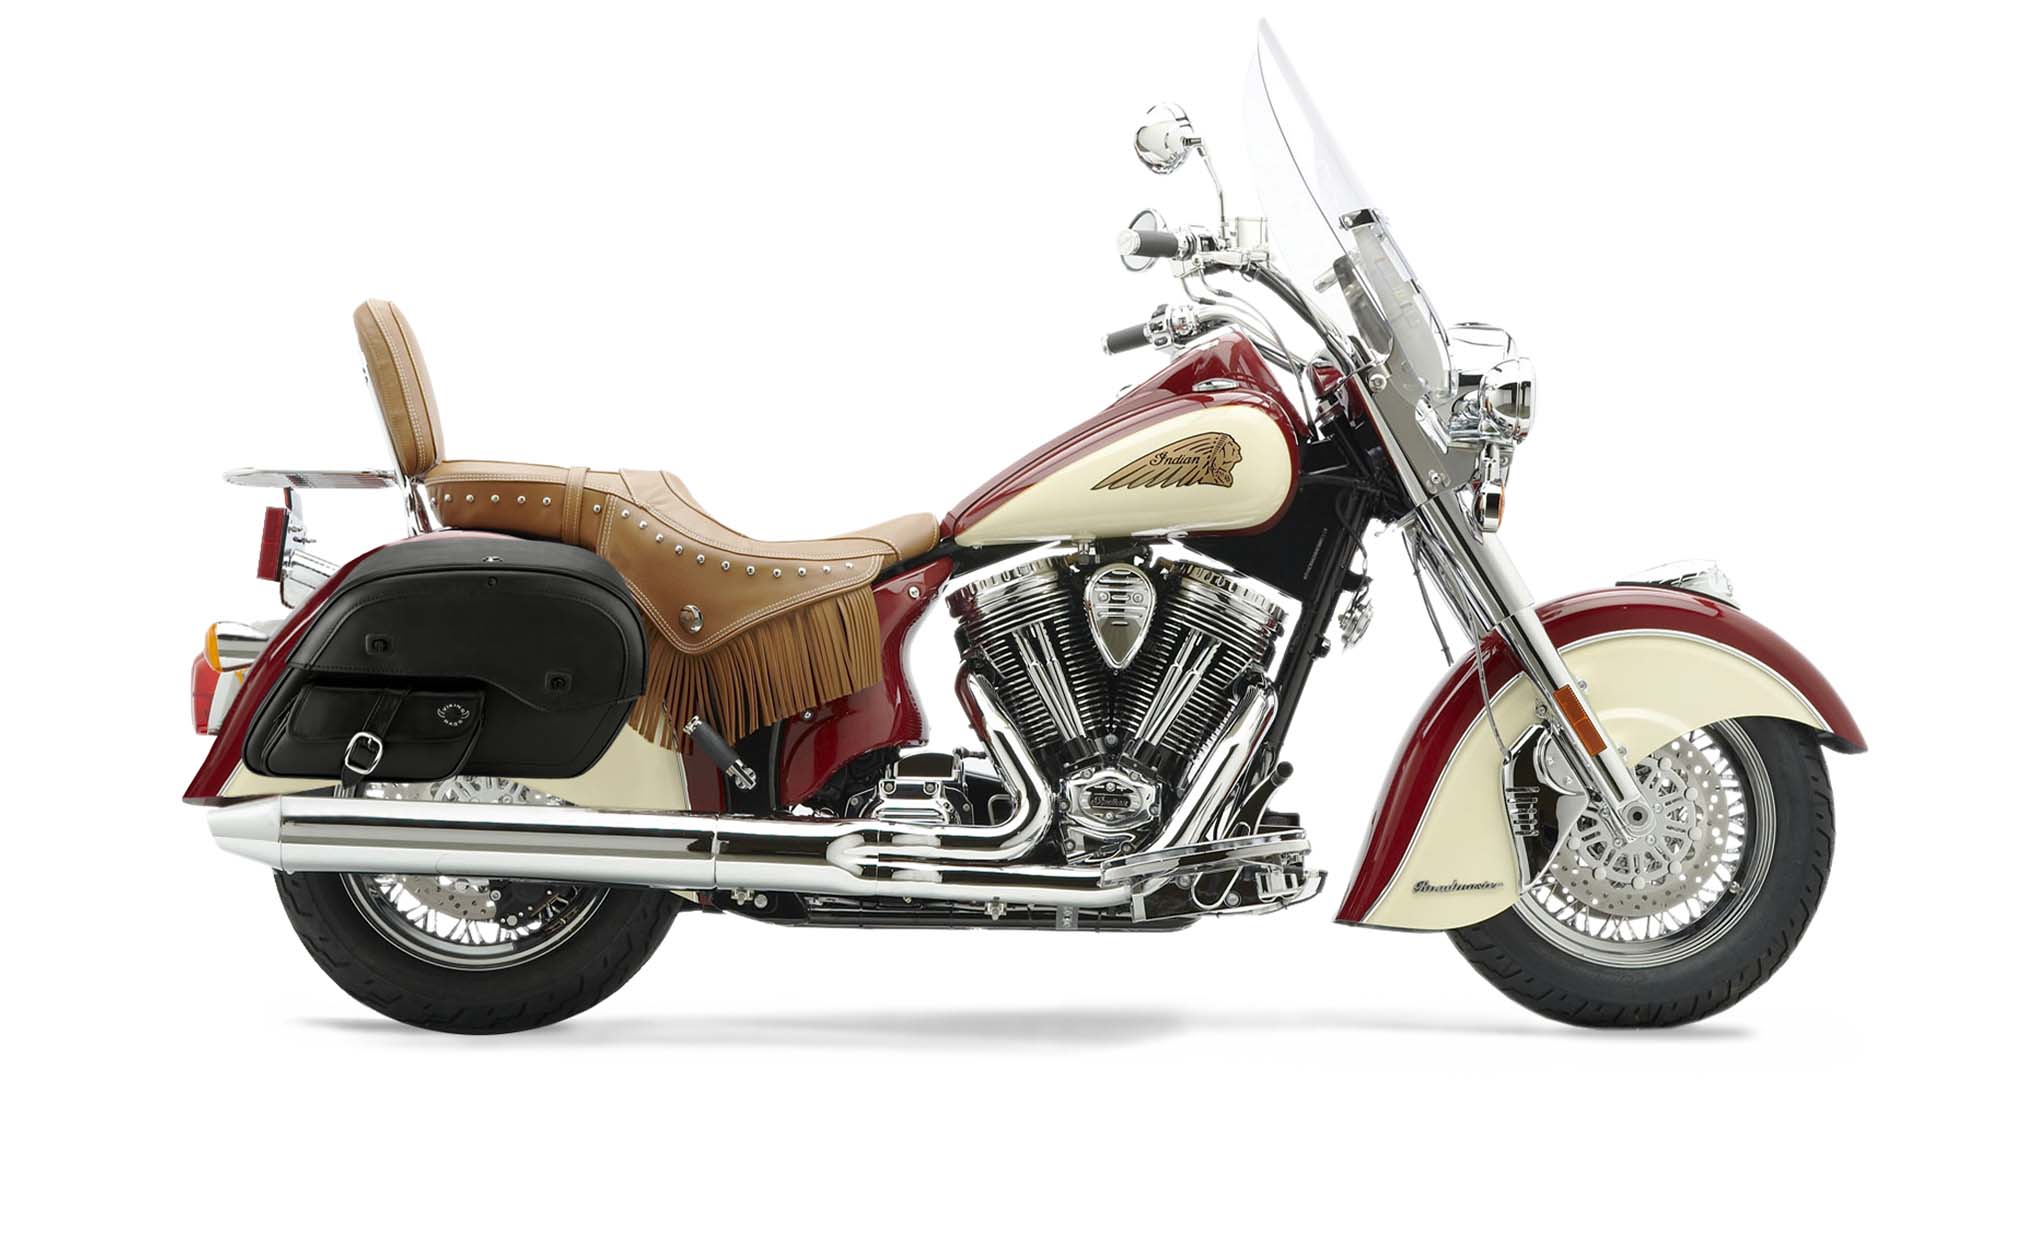 Viking Essential Side Pocket Large Indian Chief Roadmaster Leather Motorcycle Saddlebags on Bike Photo @expand